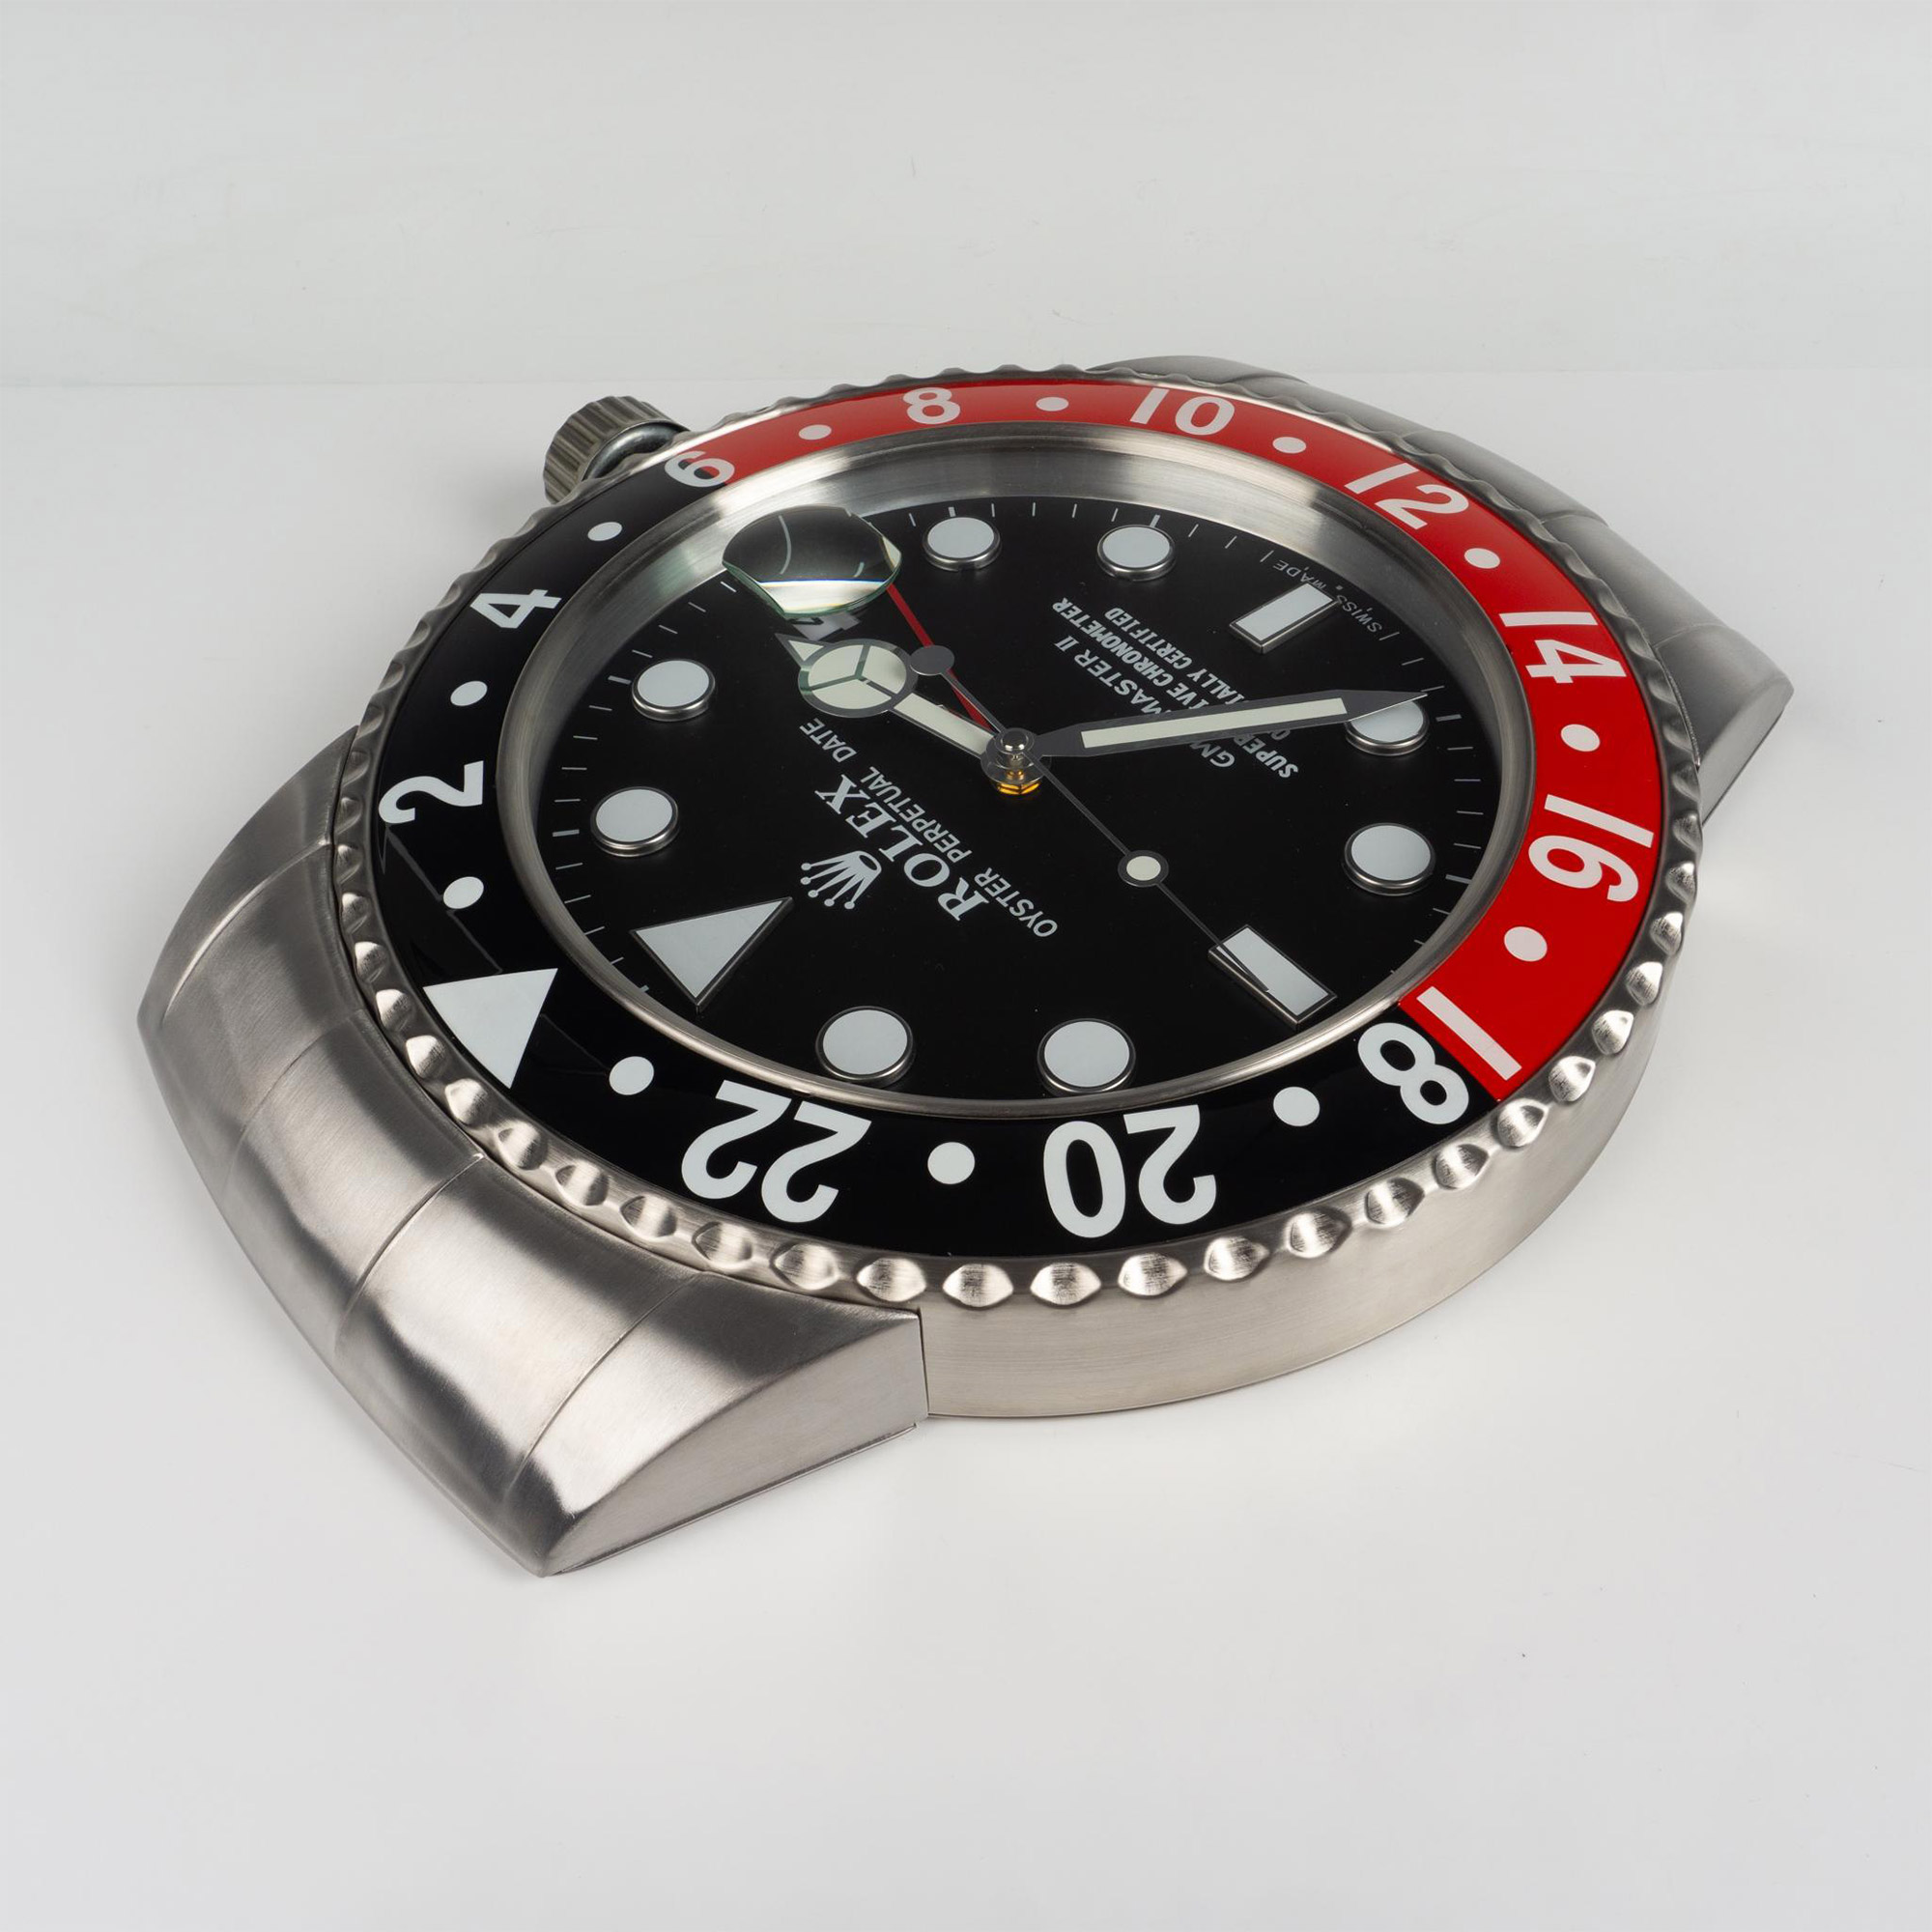 Rolex GMT Master II Coke Red & Black Dealers Clock - Image 3 of 5